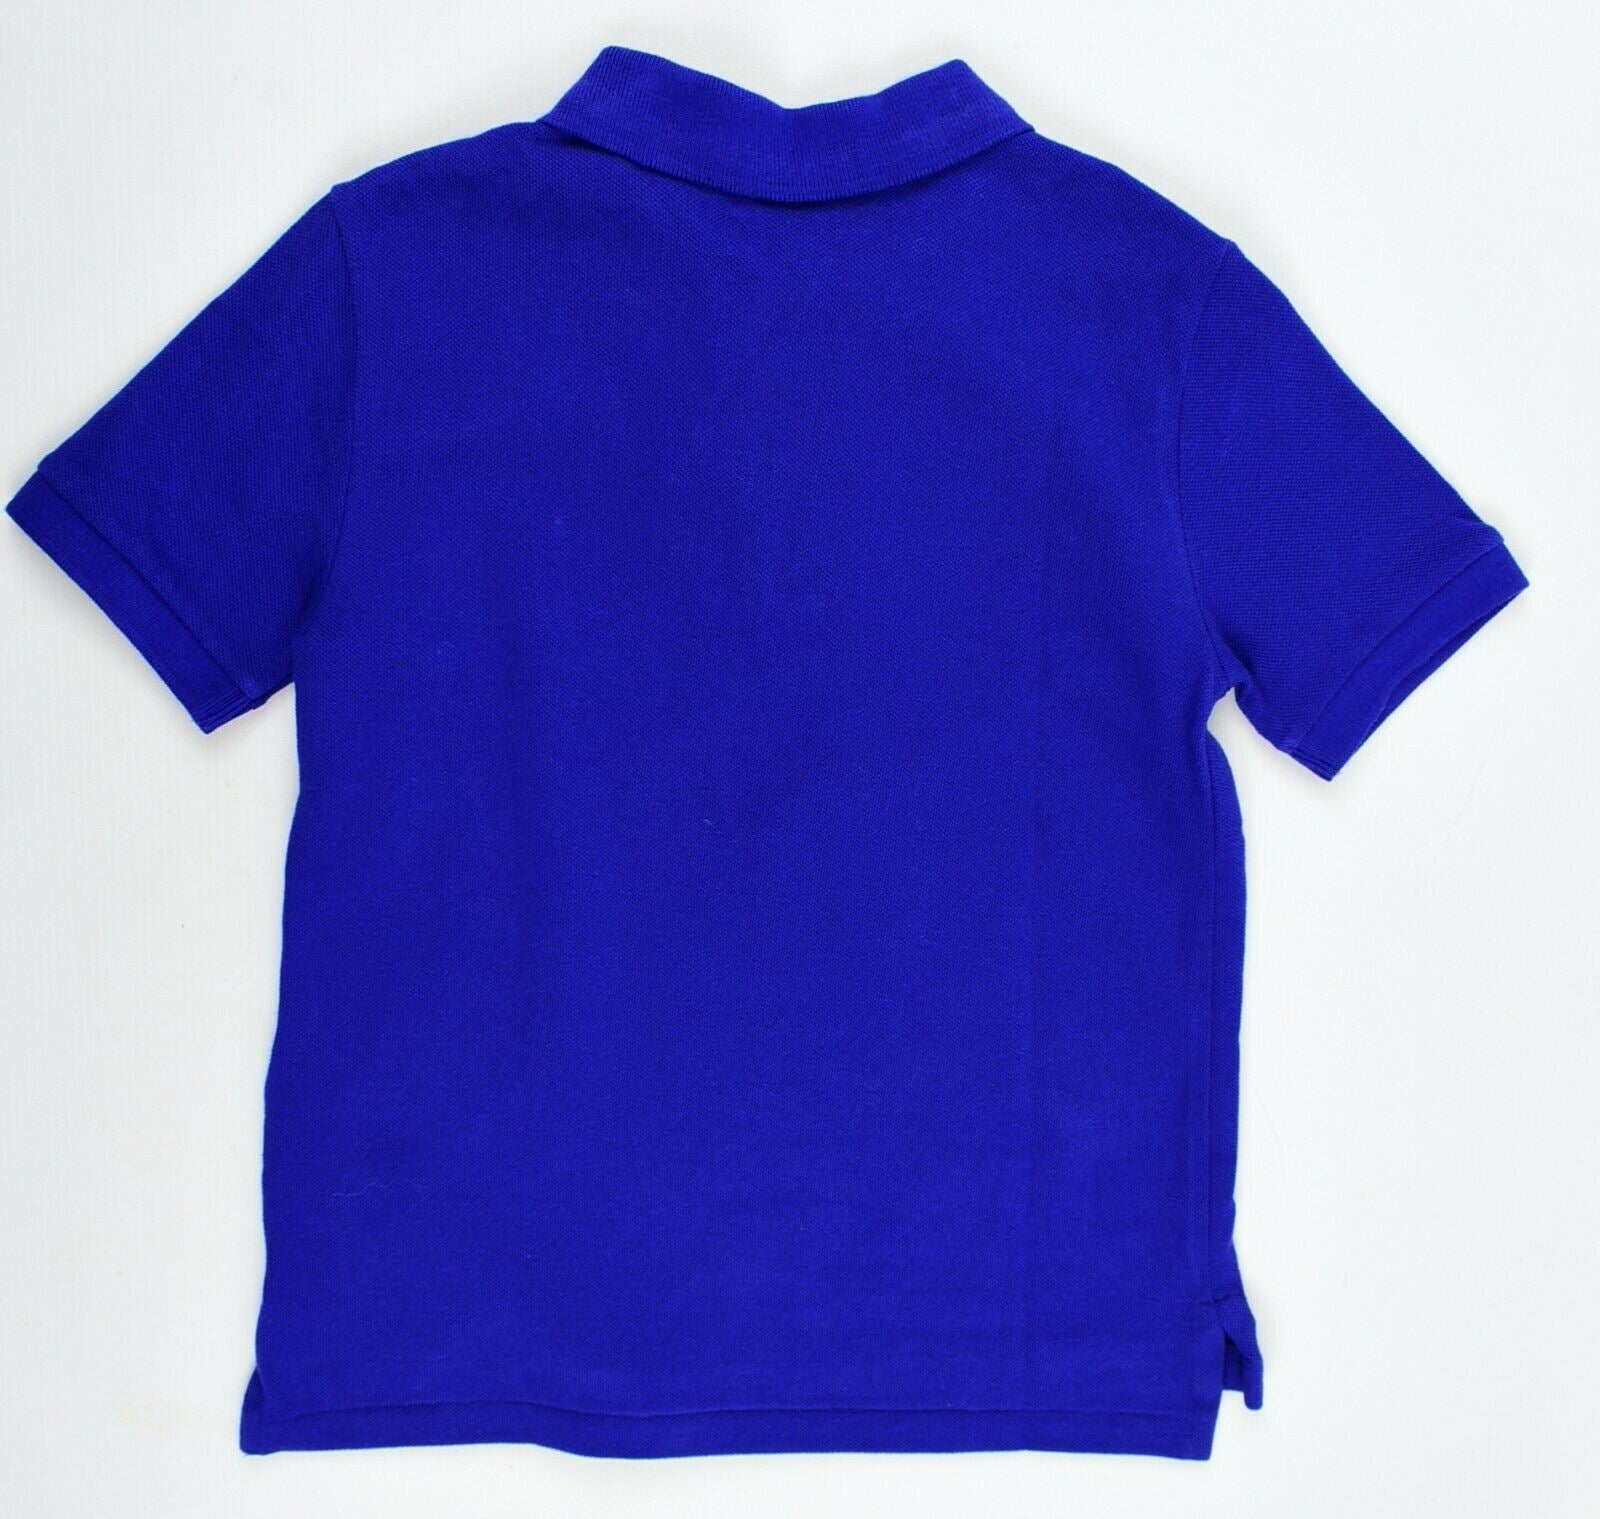 POLO RALPH LAUREN Boys' Kids' Polo Shirt, Royal Blue - size 5 years